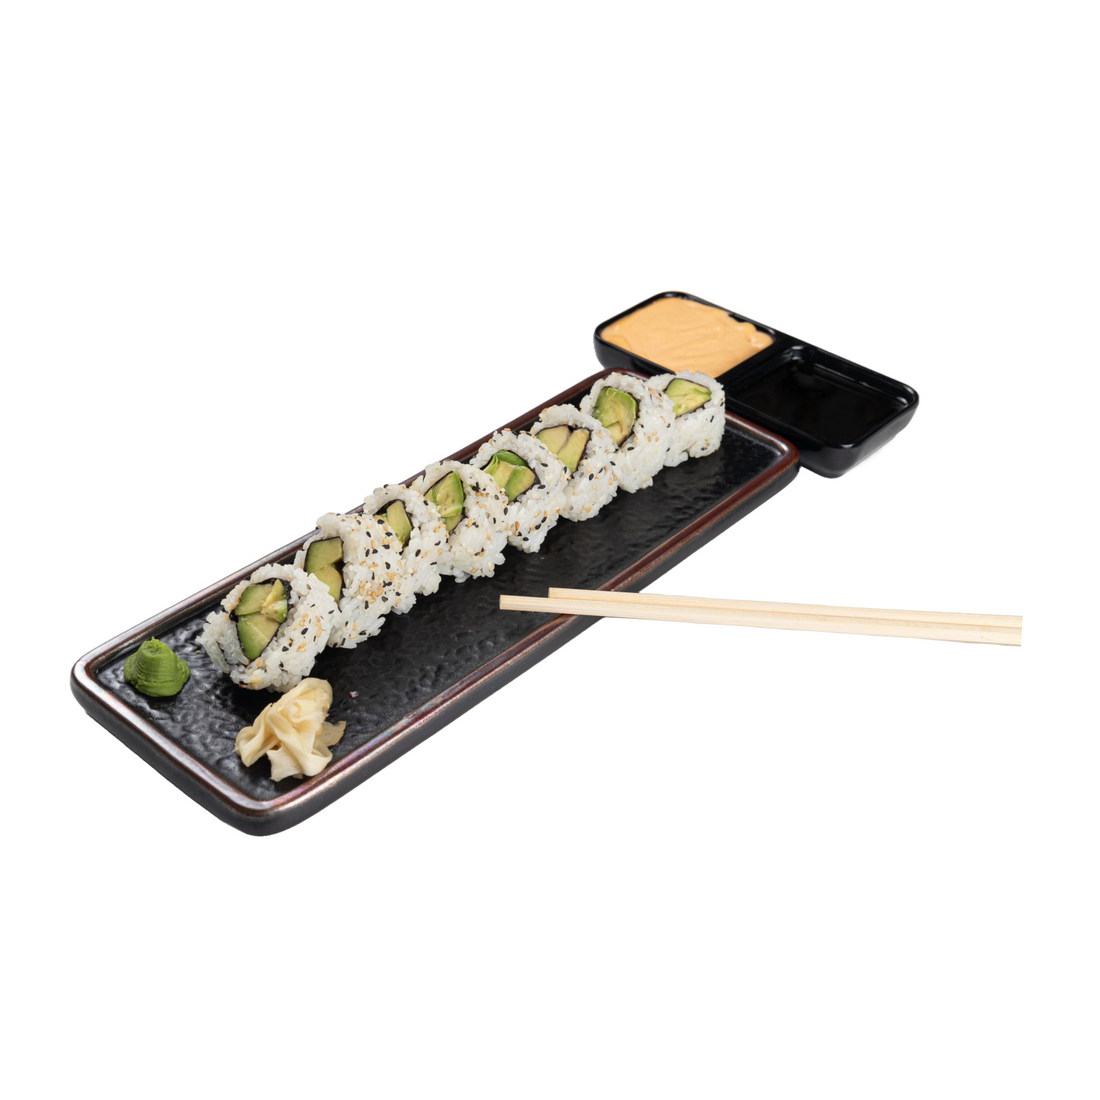 Avocado Sushi Roll by Sushimiamibeach.com